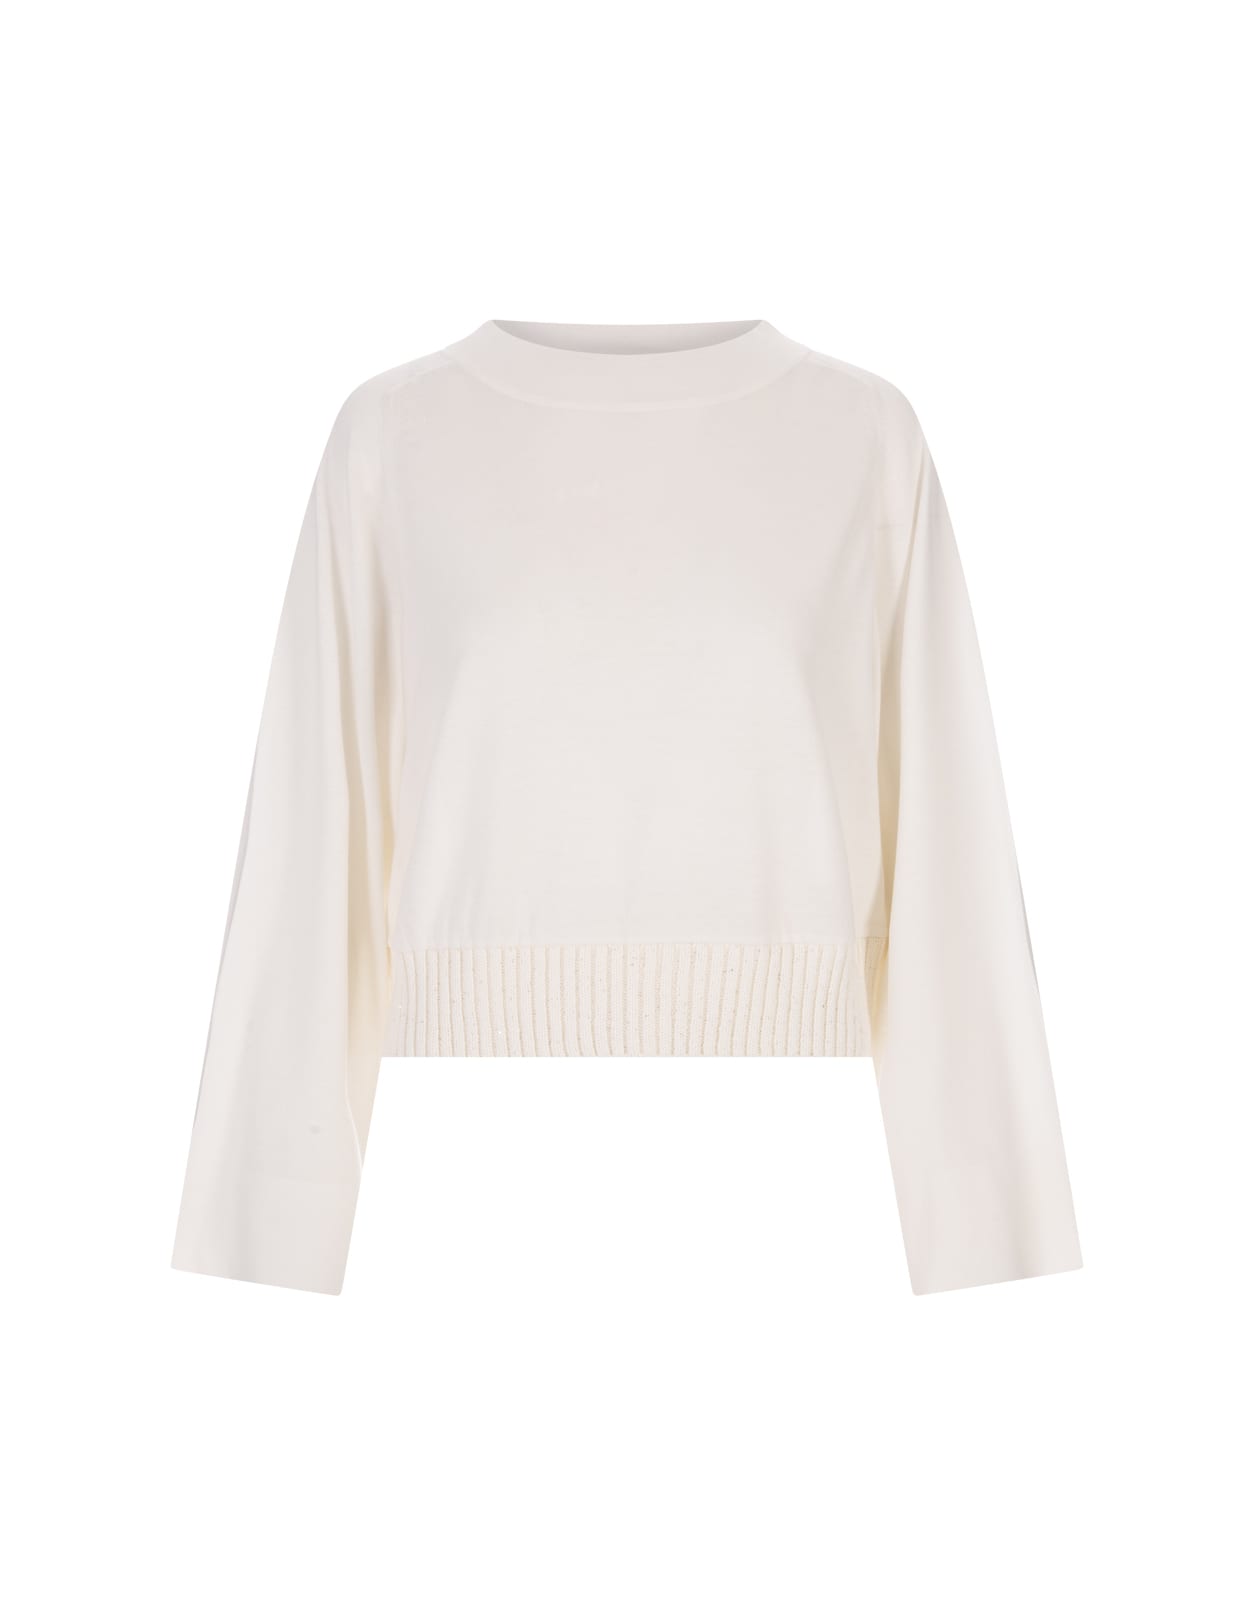 Fabiana Filippi White Silk And Cotton Sweater